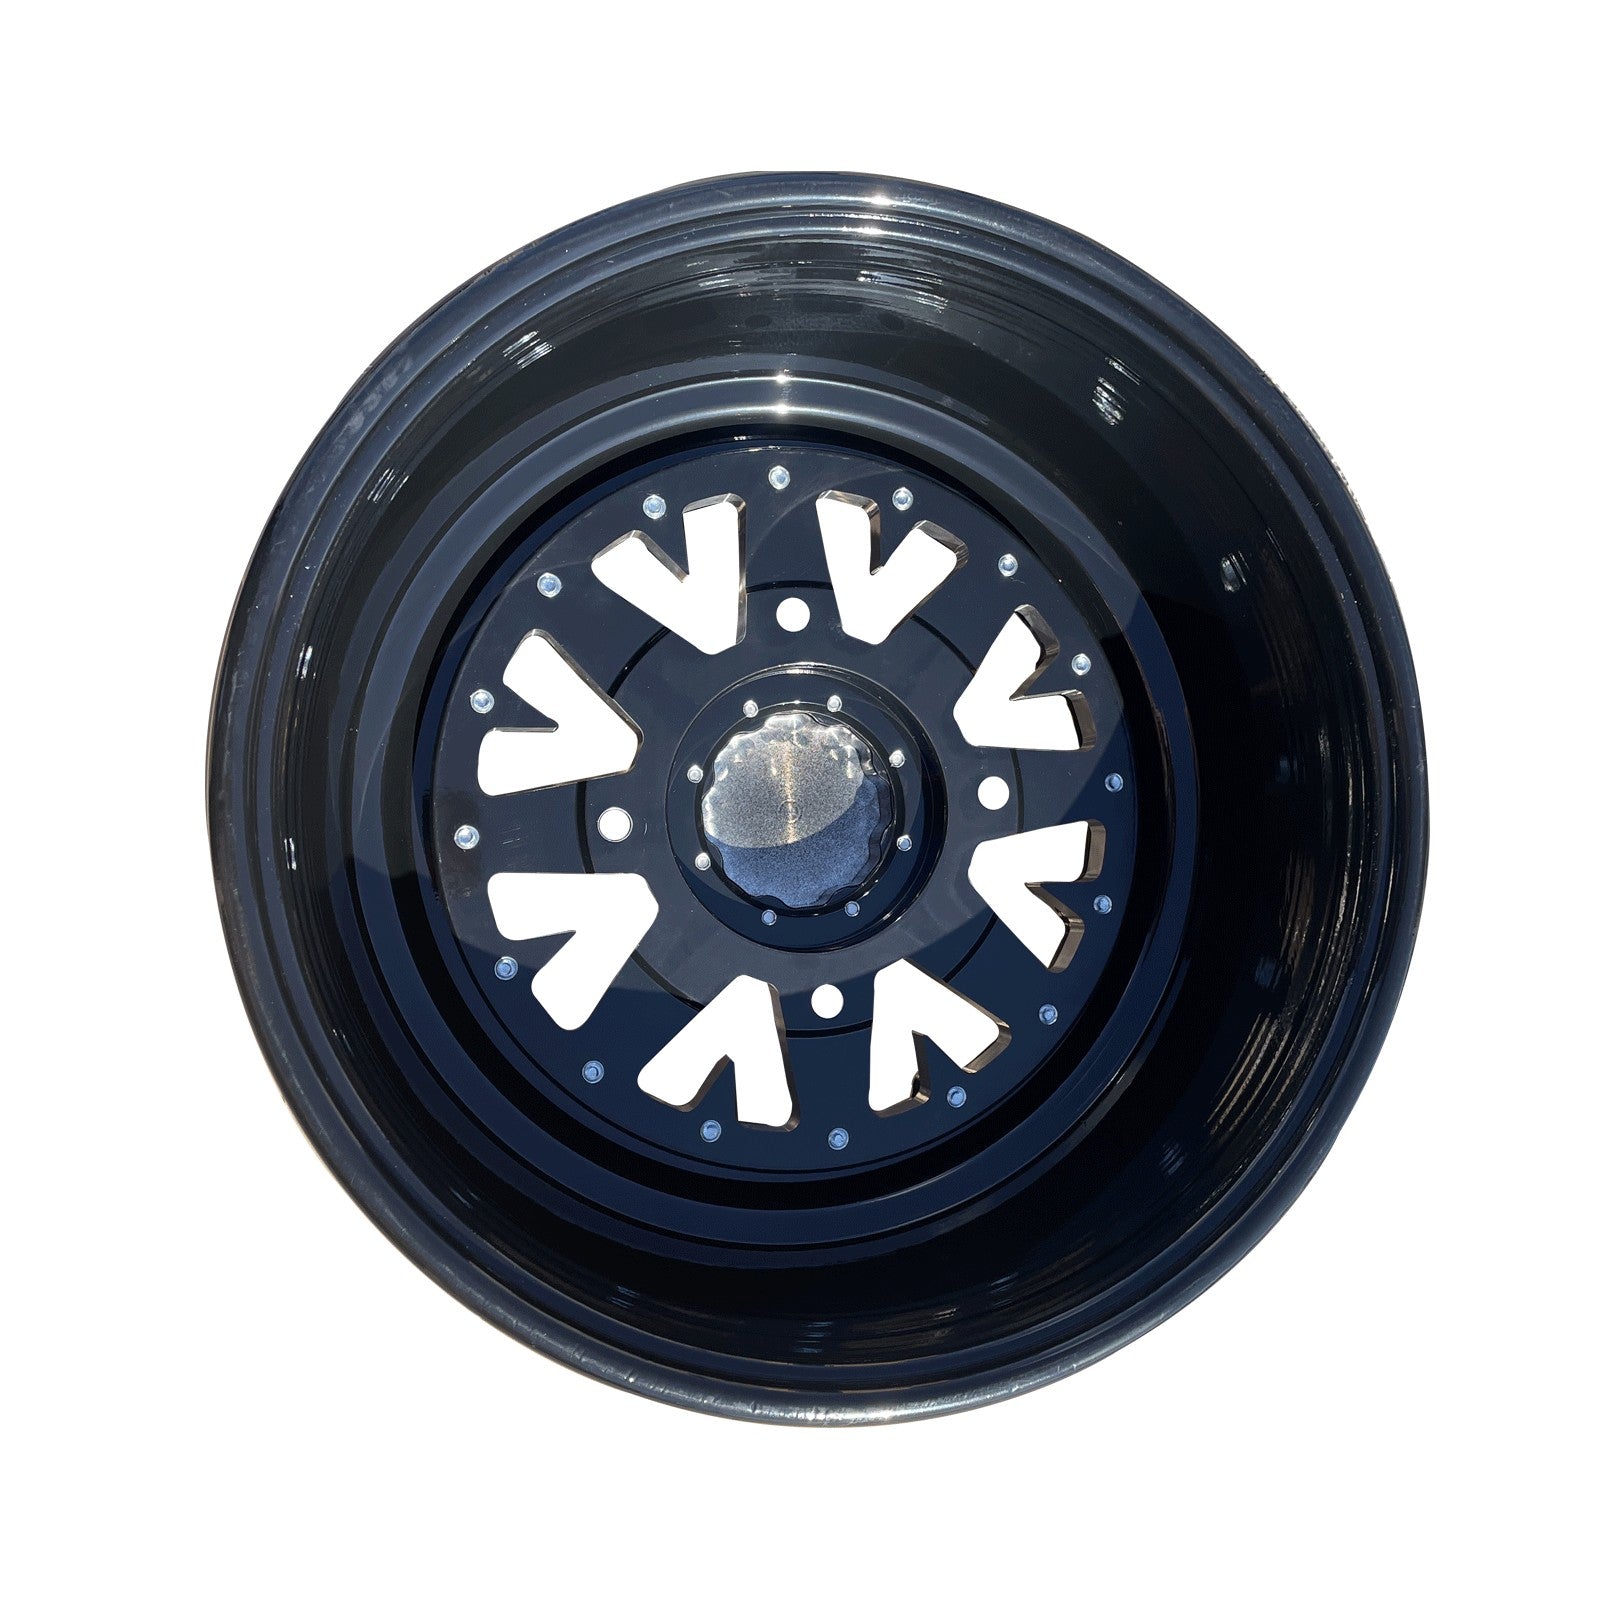 502 Billet Aluminum Beadlock Wheel | 50 Caliber Racing